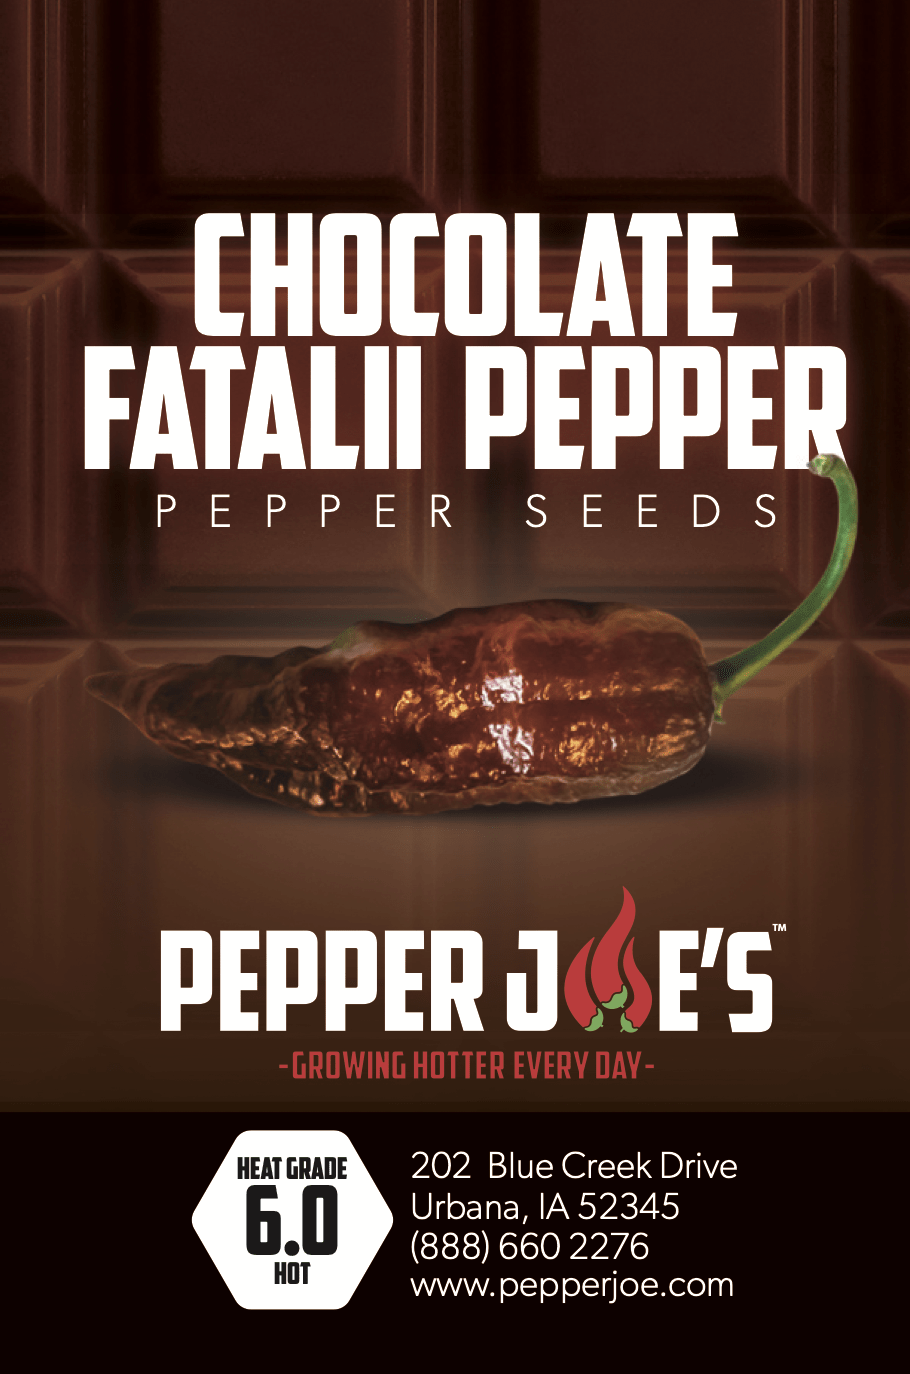 Pepper Joe's Fatali Chocolate pepper - seed label